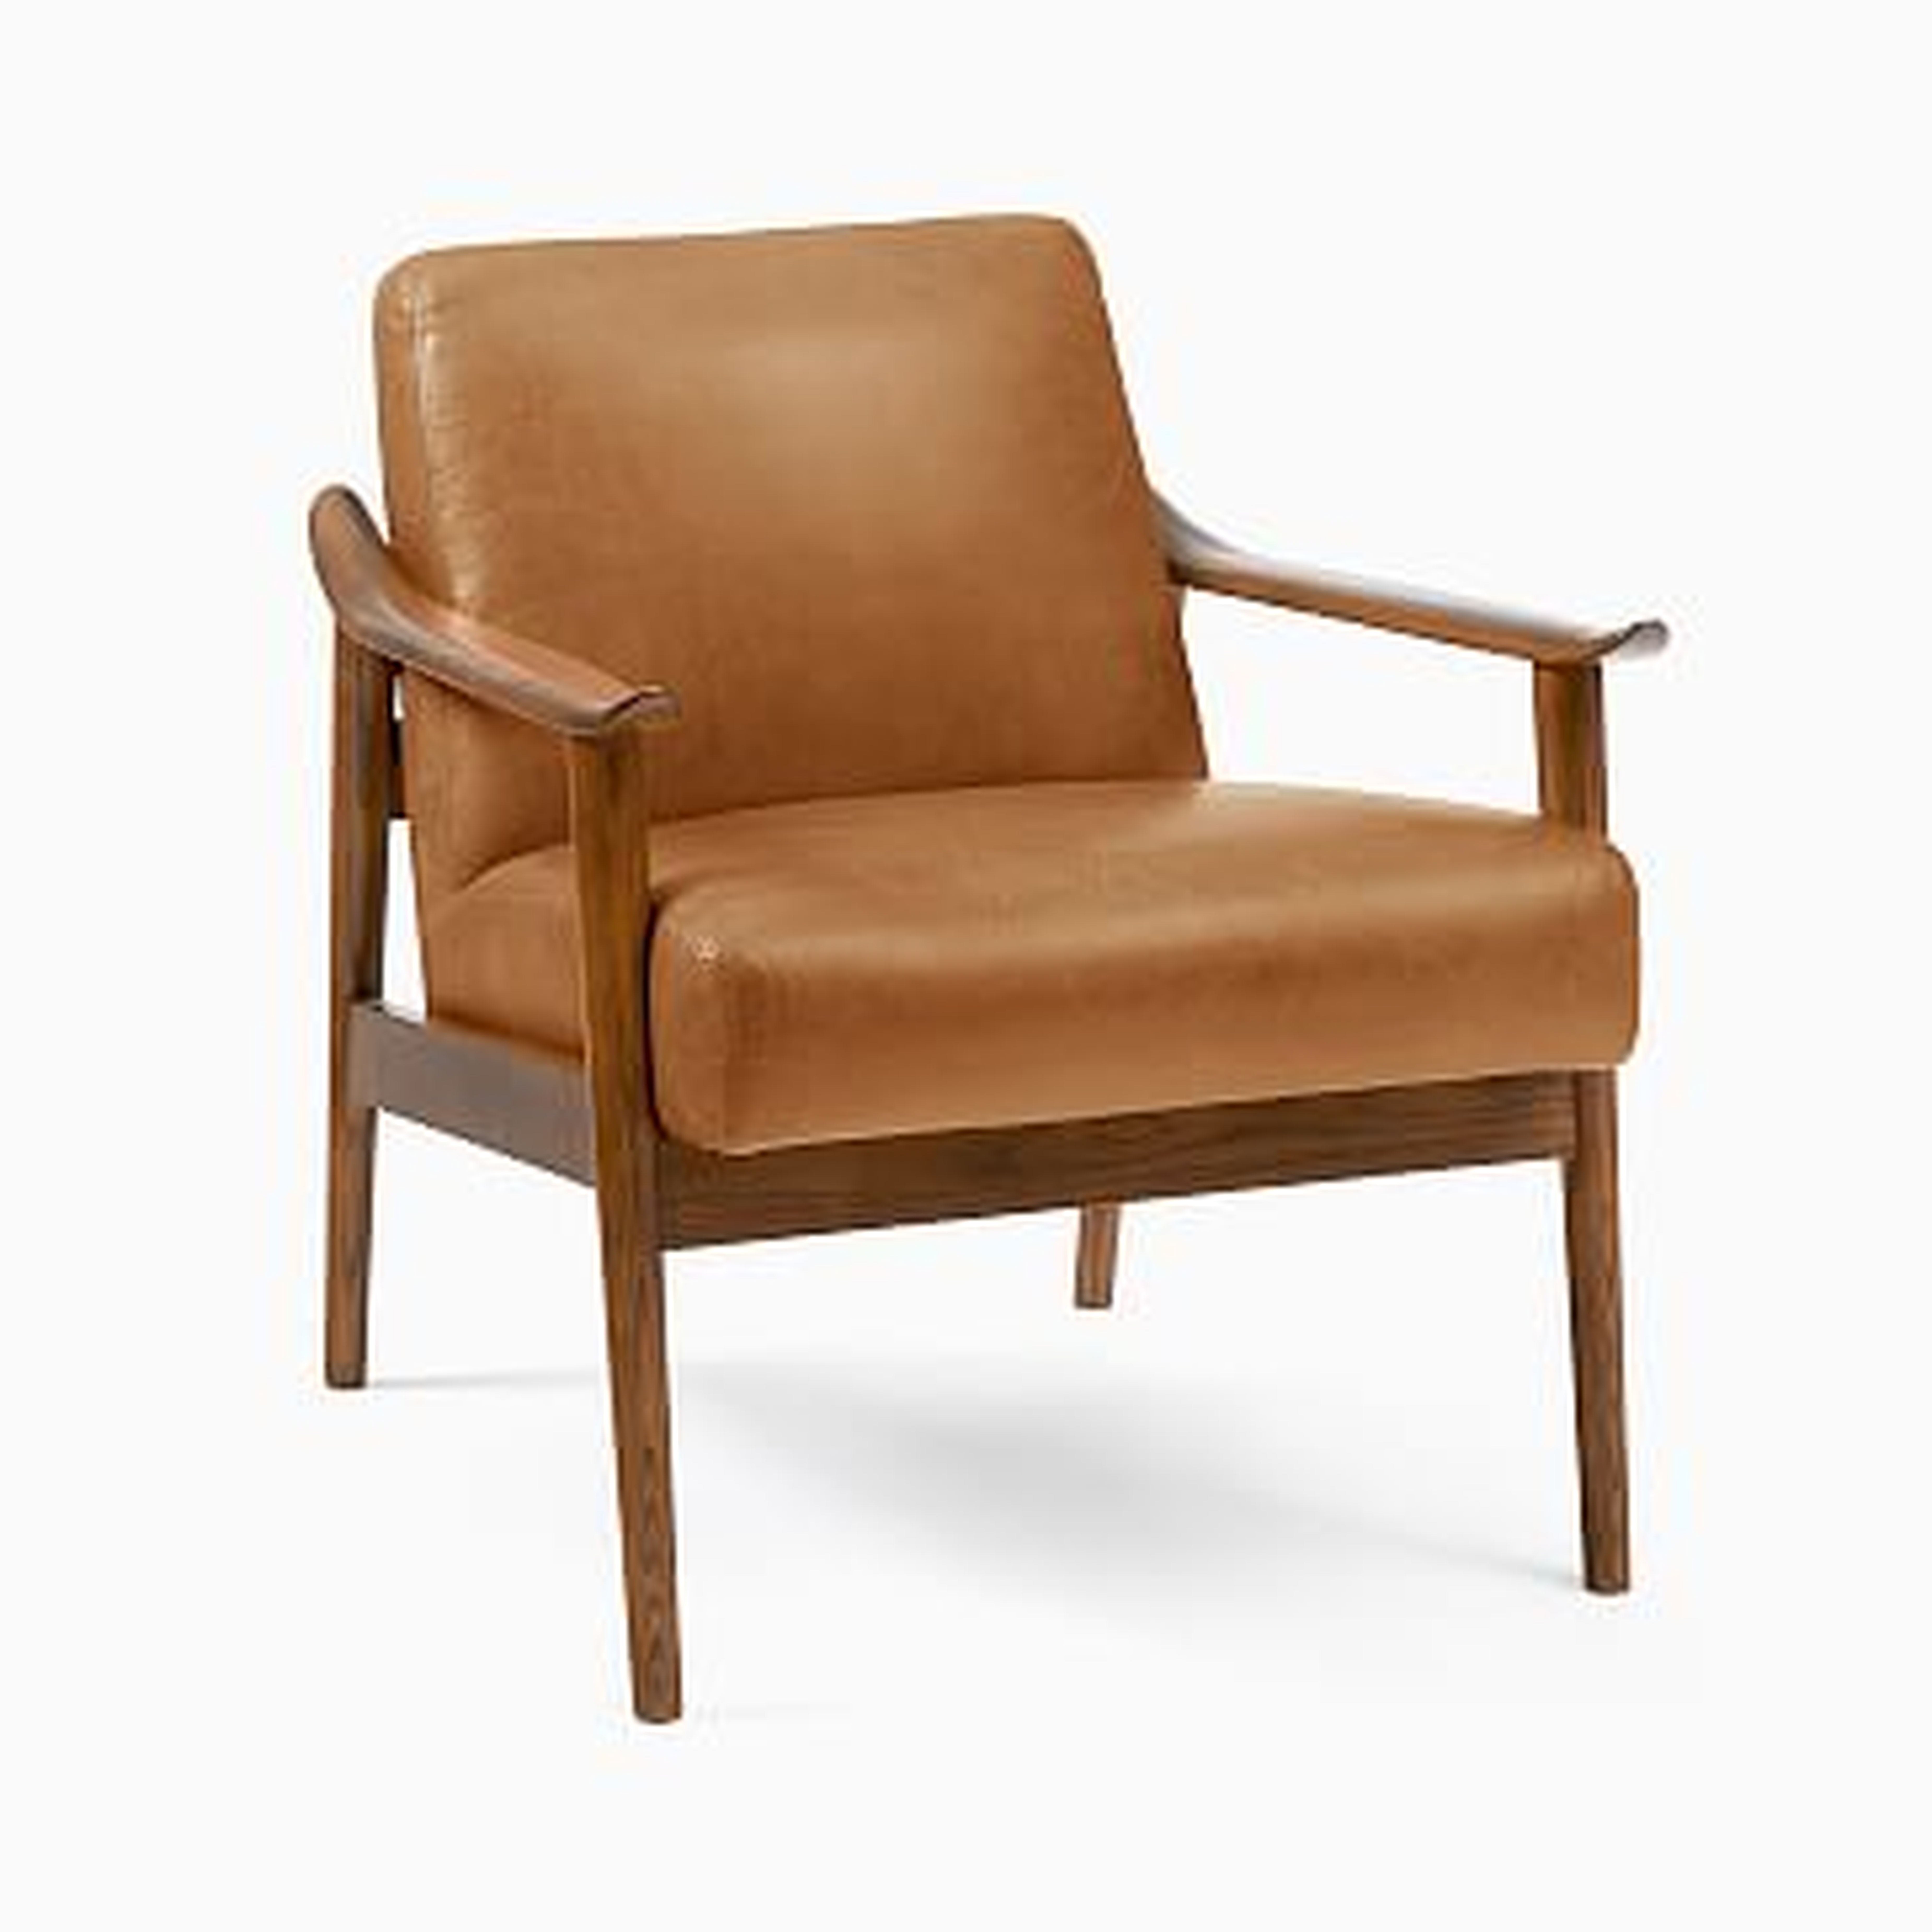 Midcentury Show Wood Leather Chair, Nero/Pecan, set of 2 - West Elm